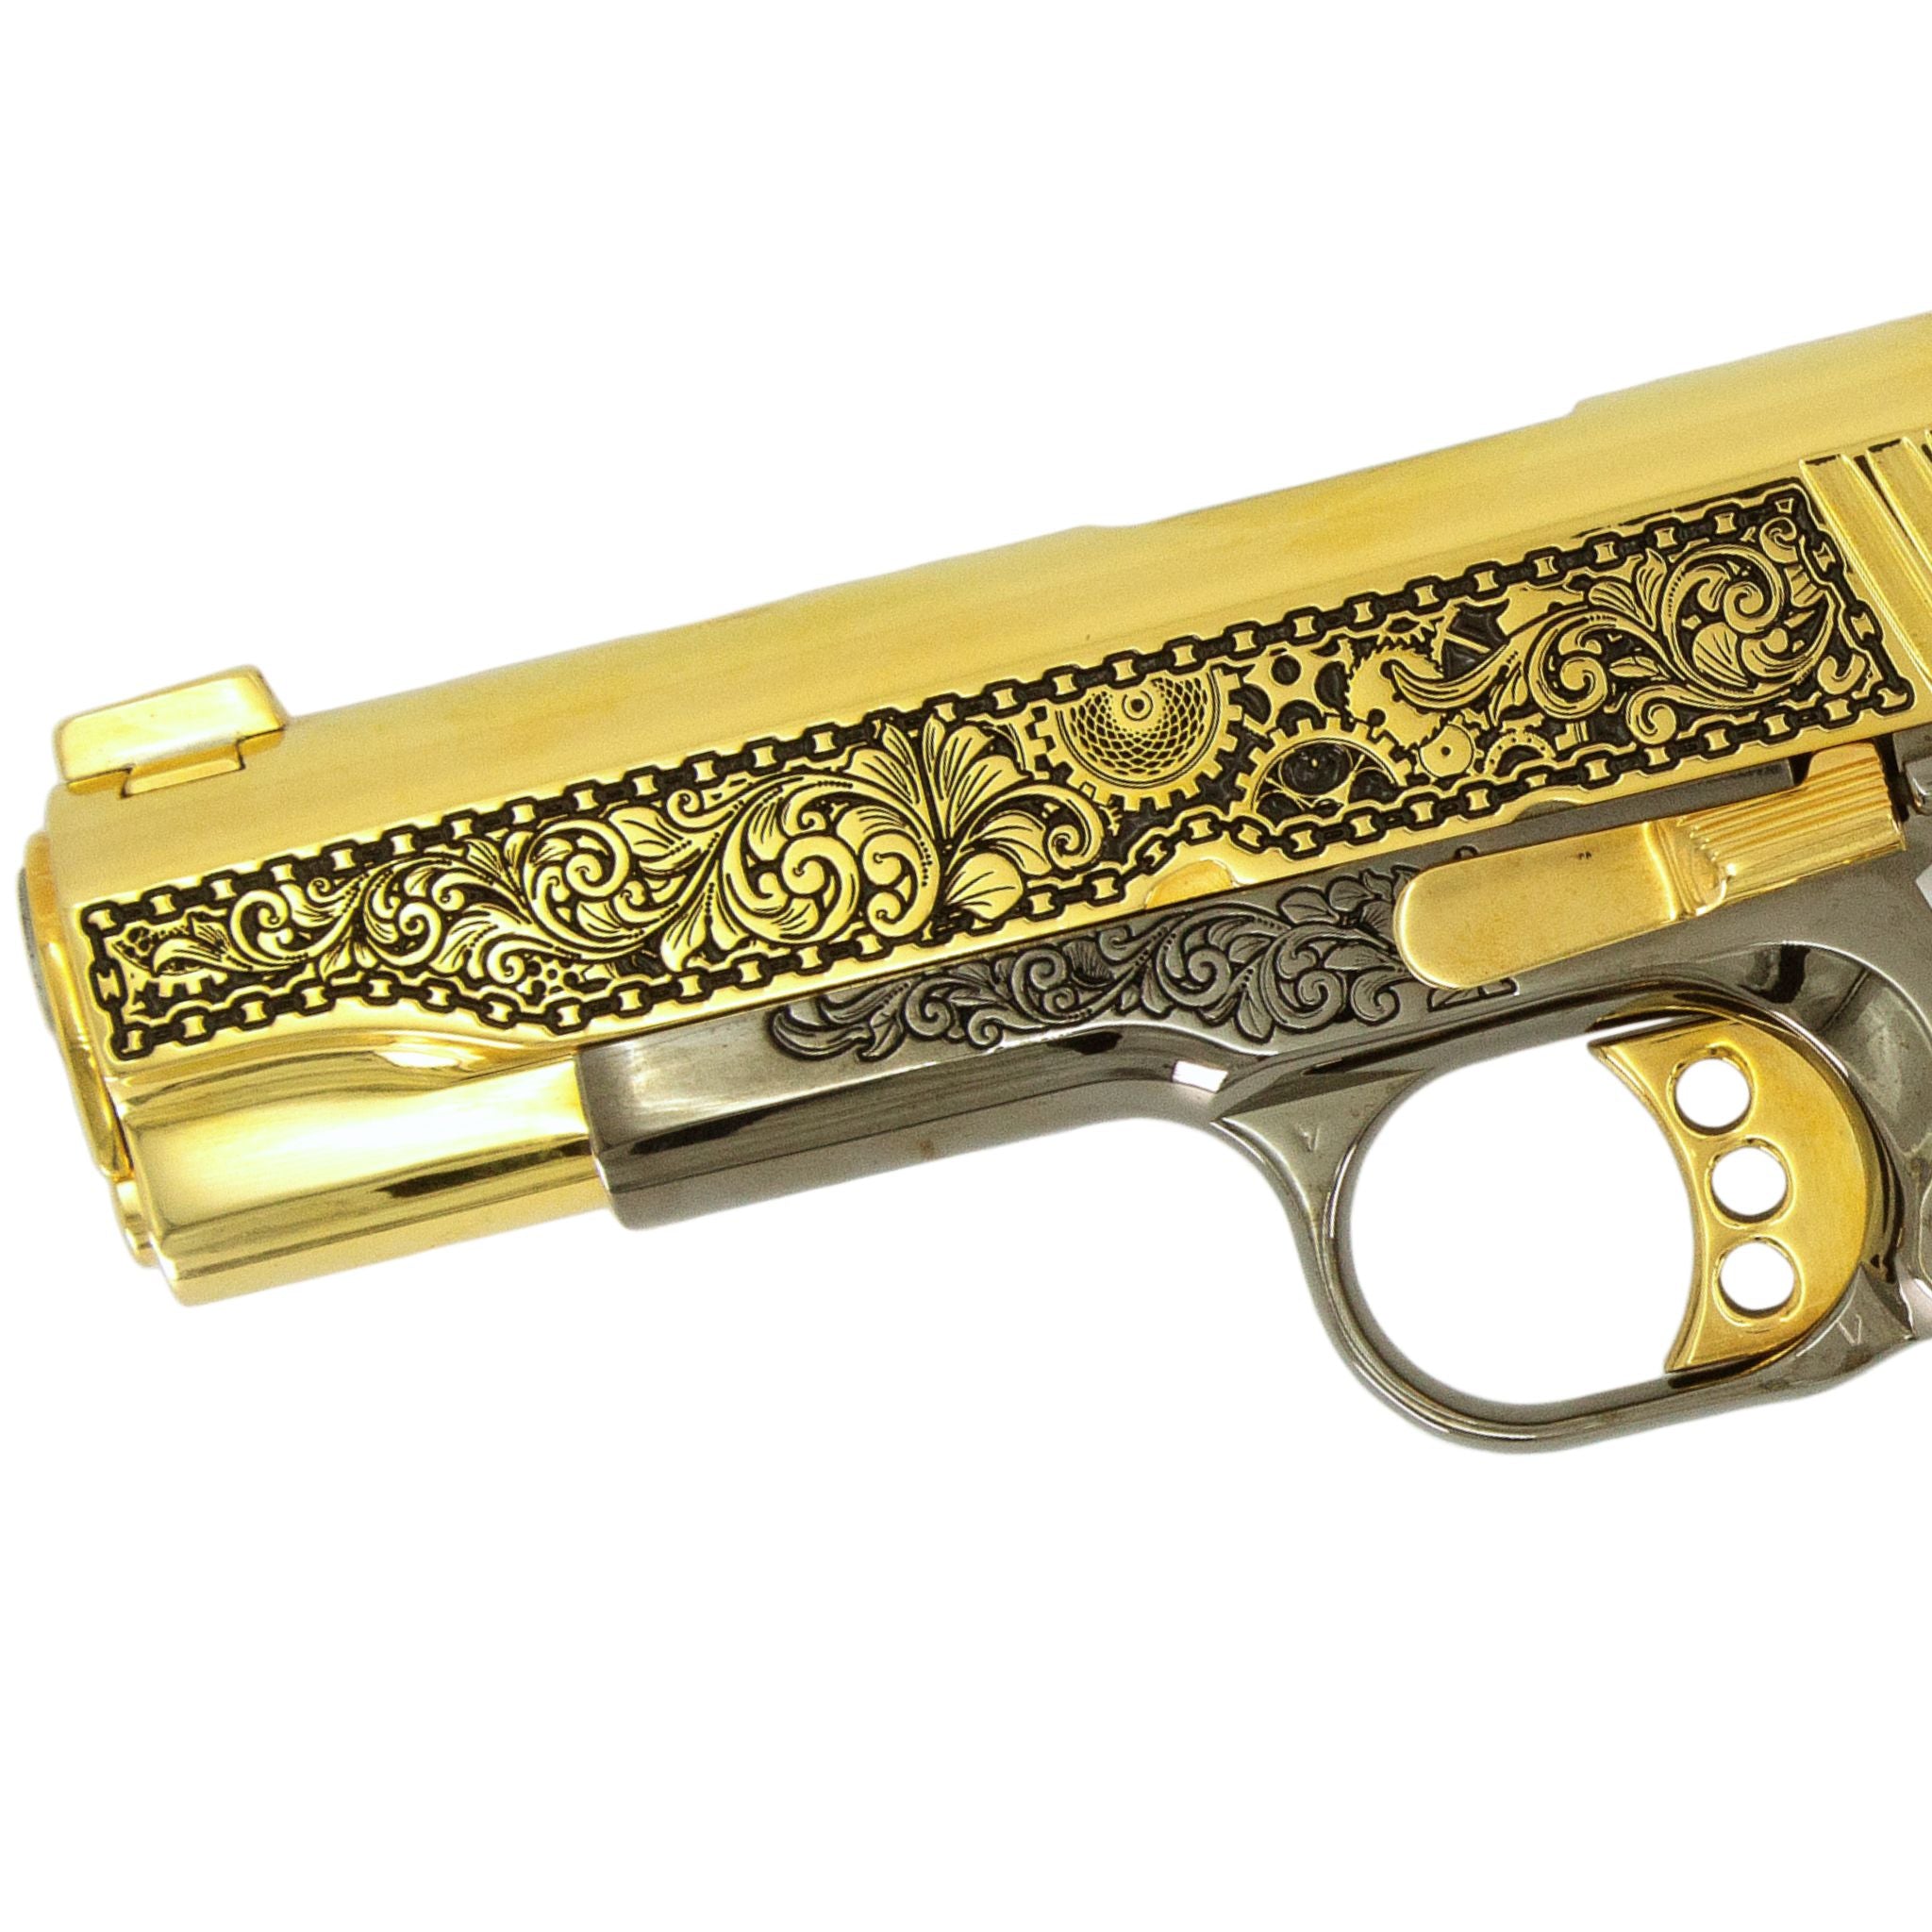 Colt 1911 Combat Commander, 45 ACP,  Engraved In High Polish 24 karat Gold Plated and Black Chrome Clockwork Design,SKU: 7010463121510, Gold Gun, Gold Firearm, Engraved Firearm 